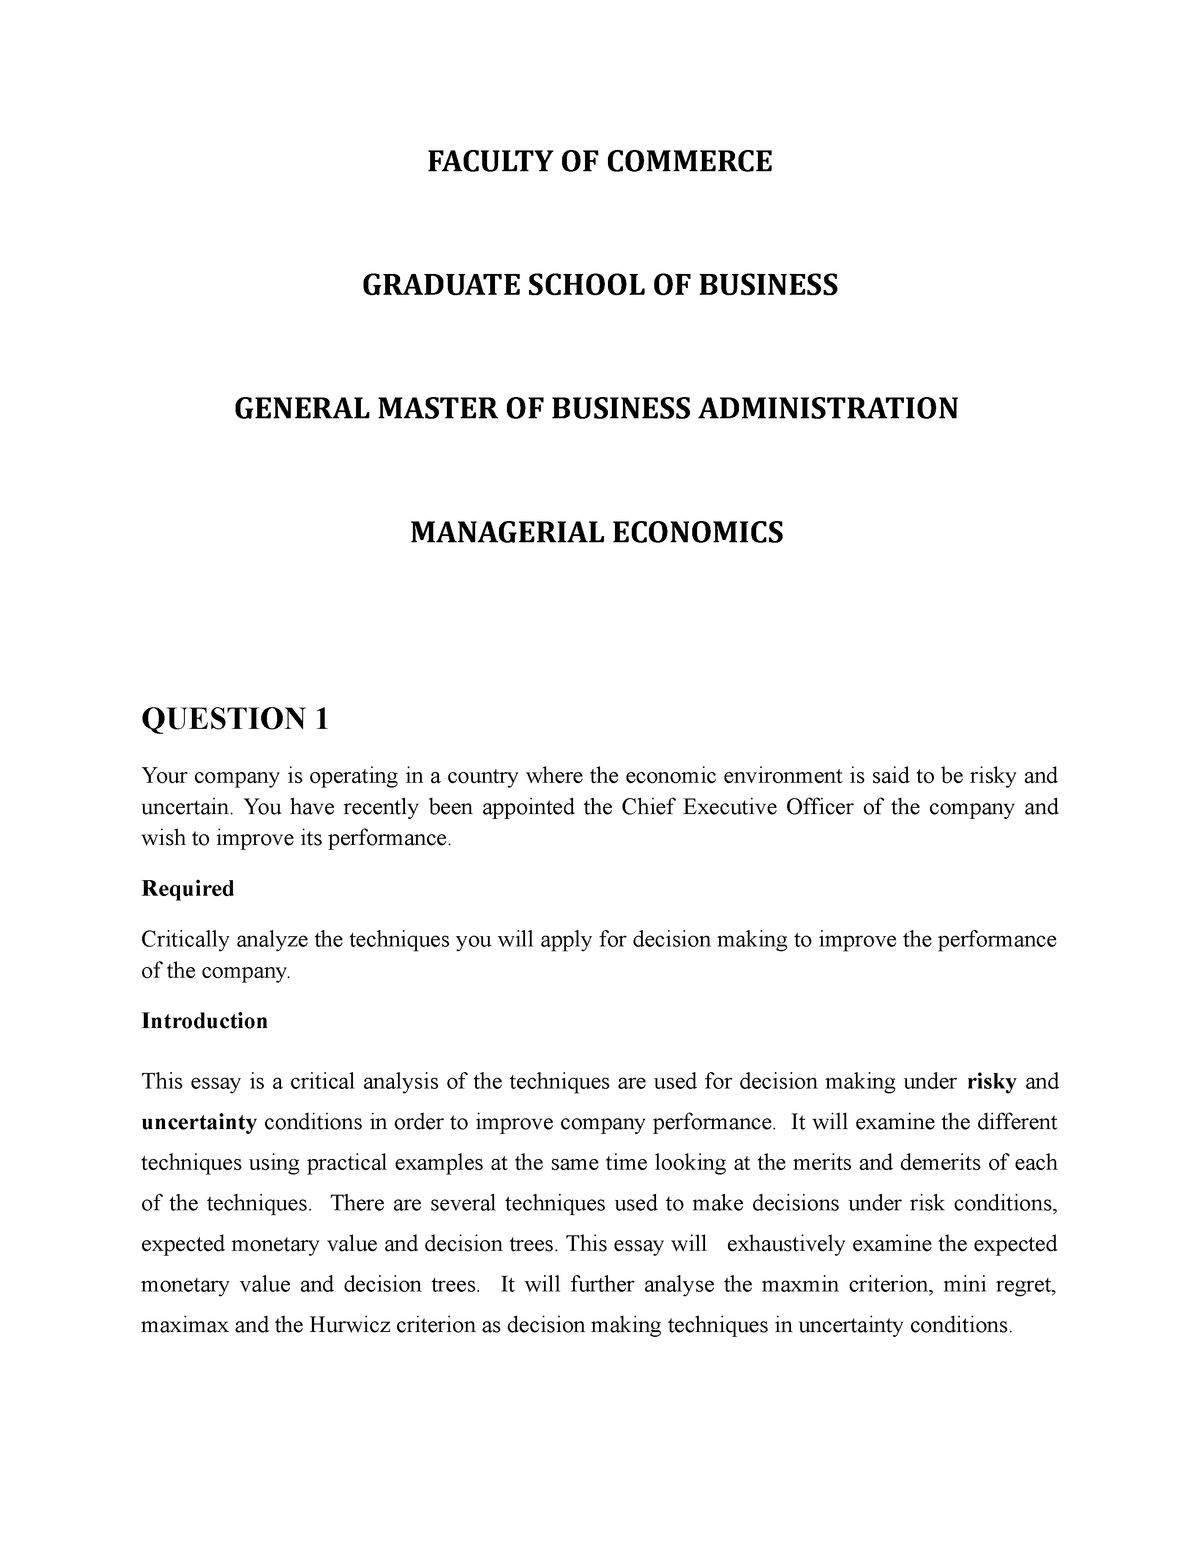 assignment on business economics